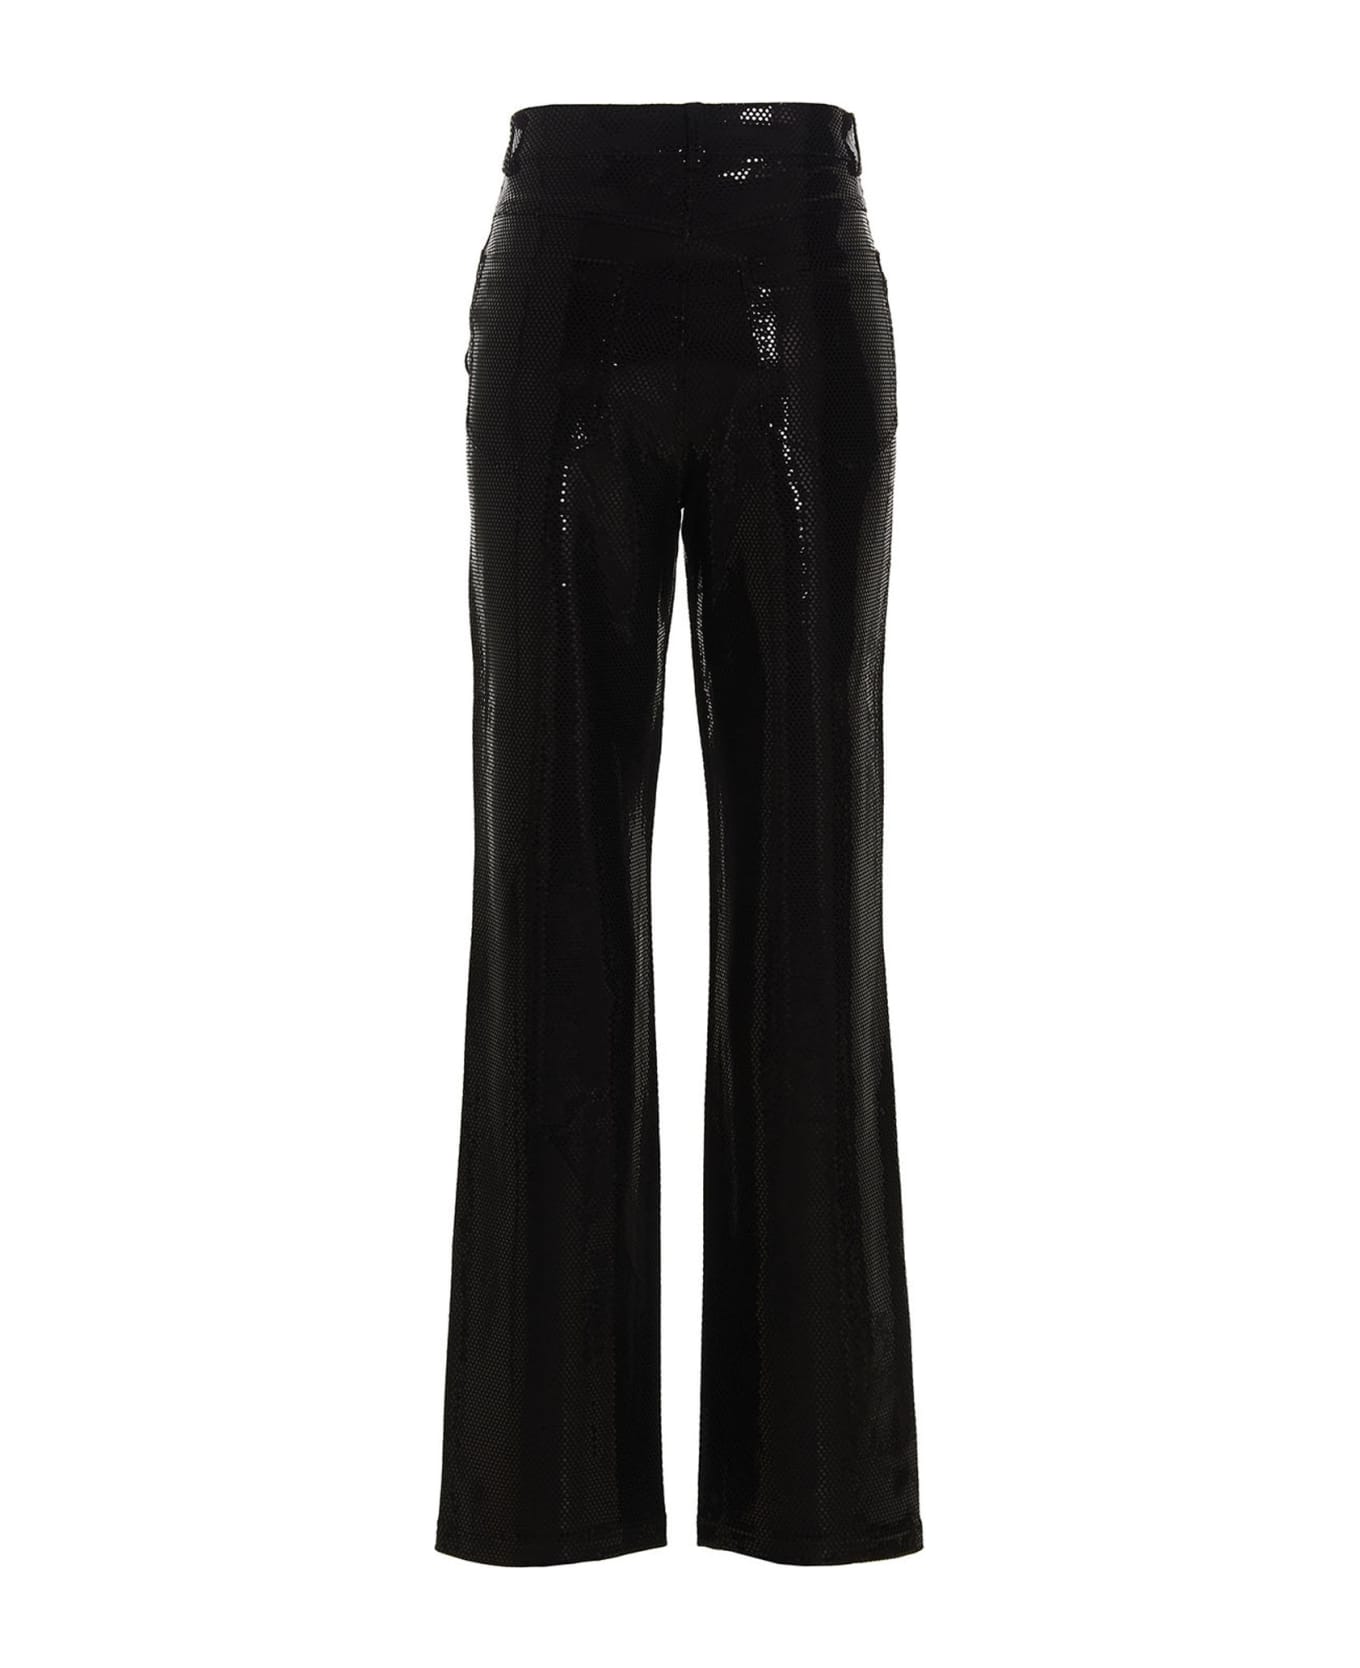 Rotate by Birger Christensen Foil Jersey Straight' Pants - Black  